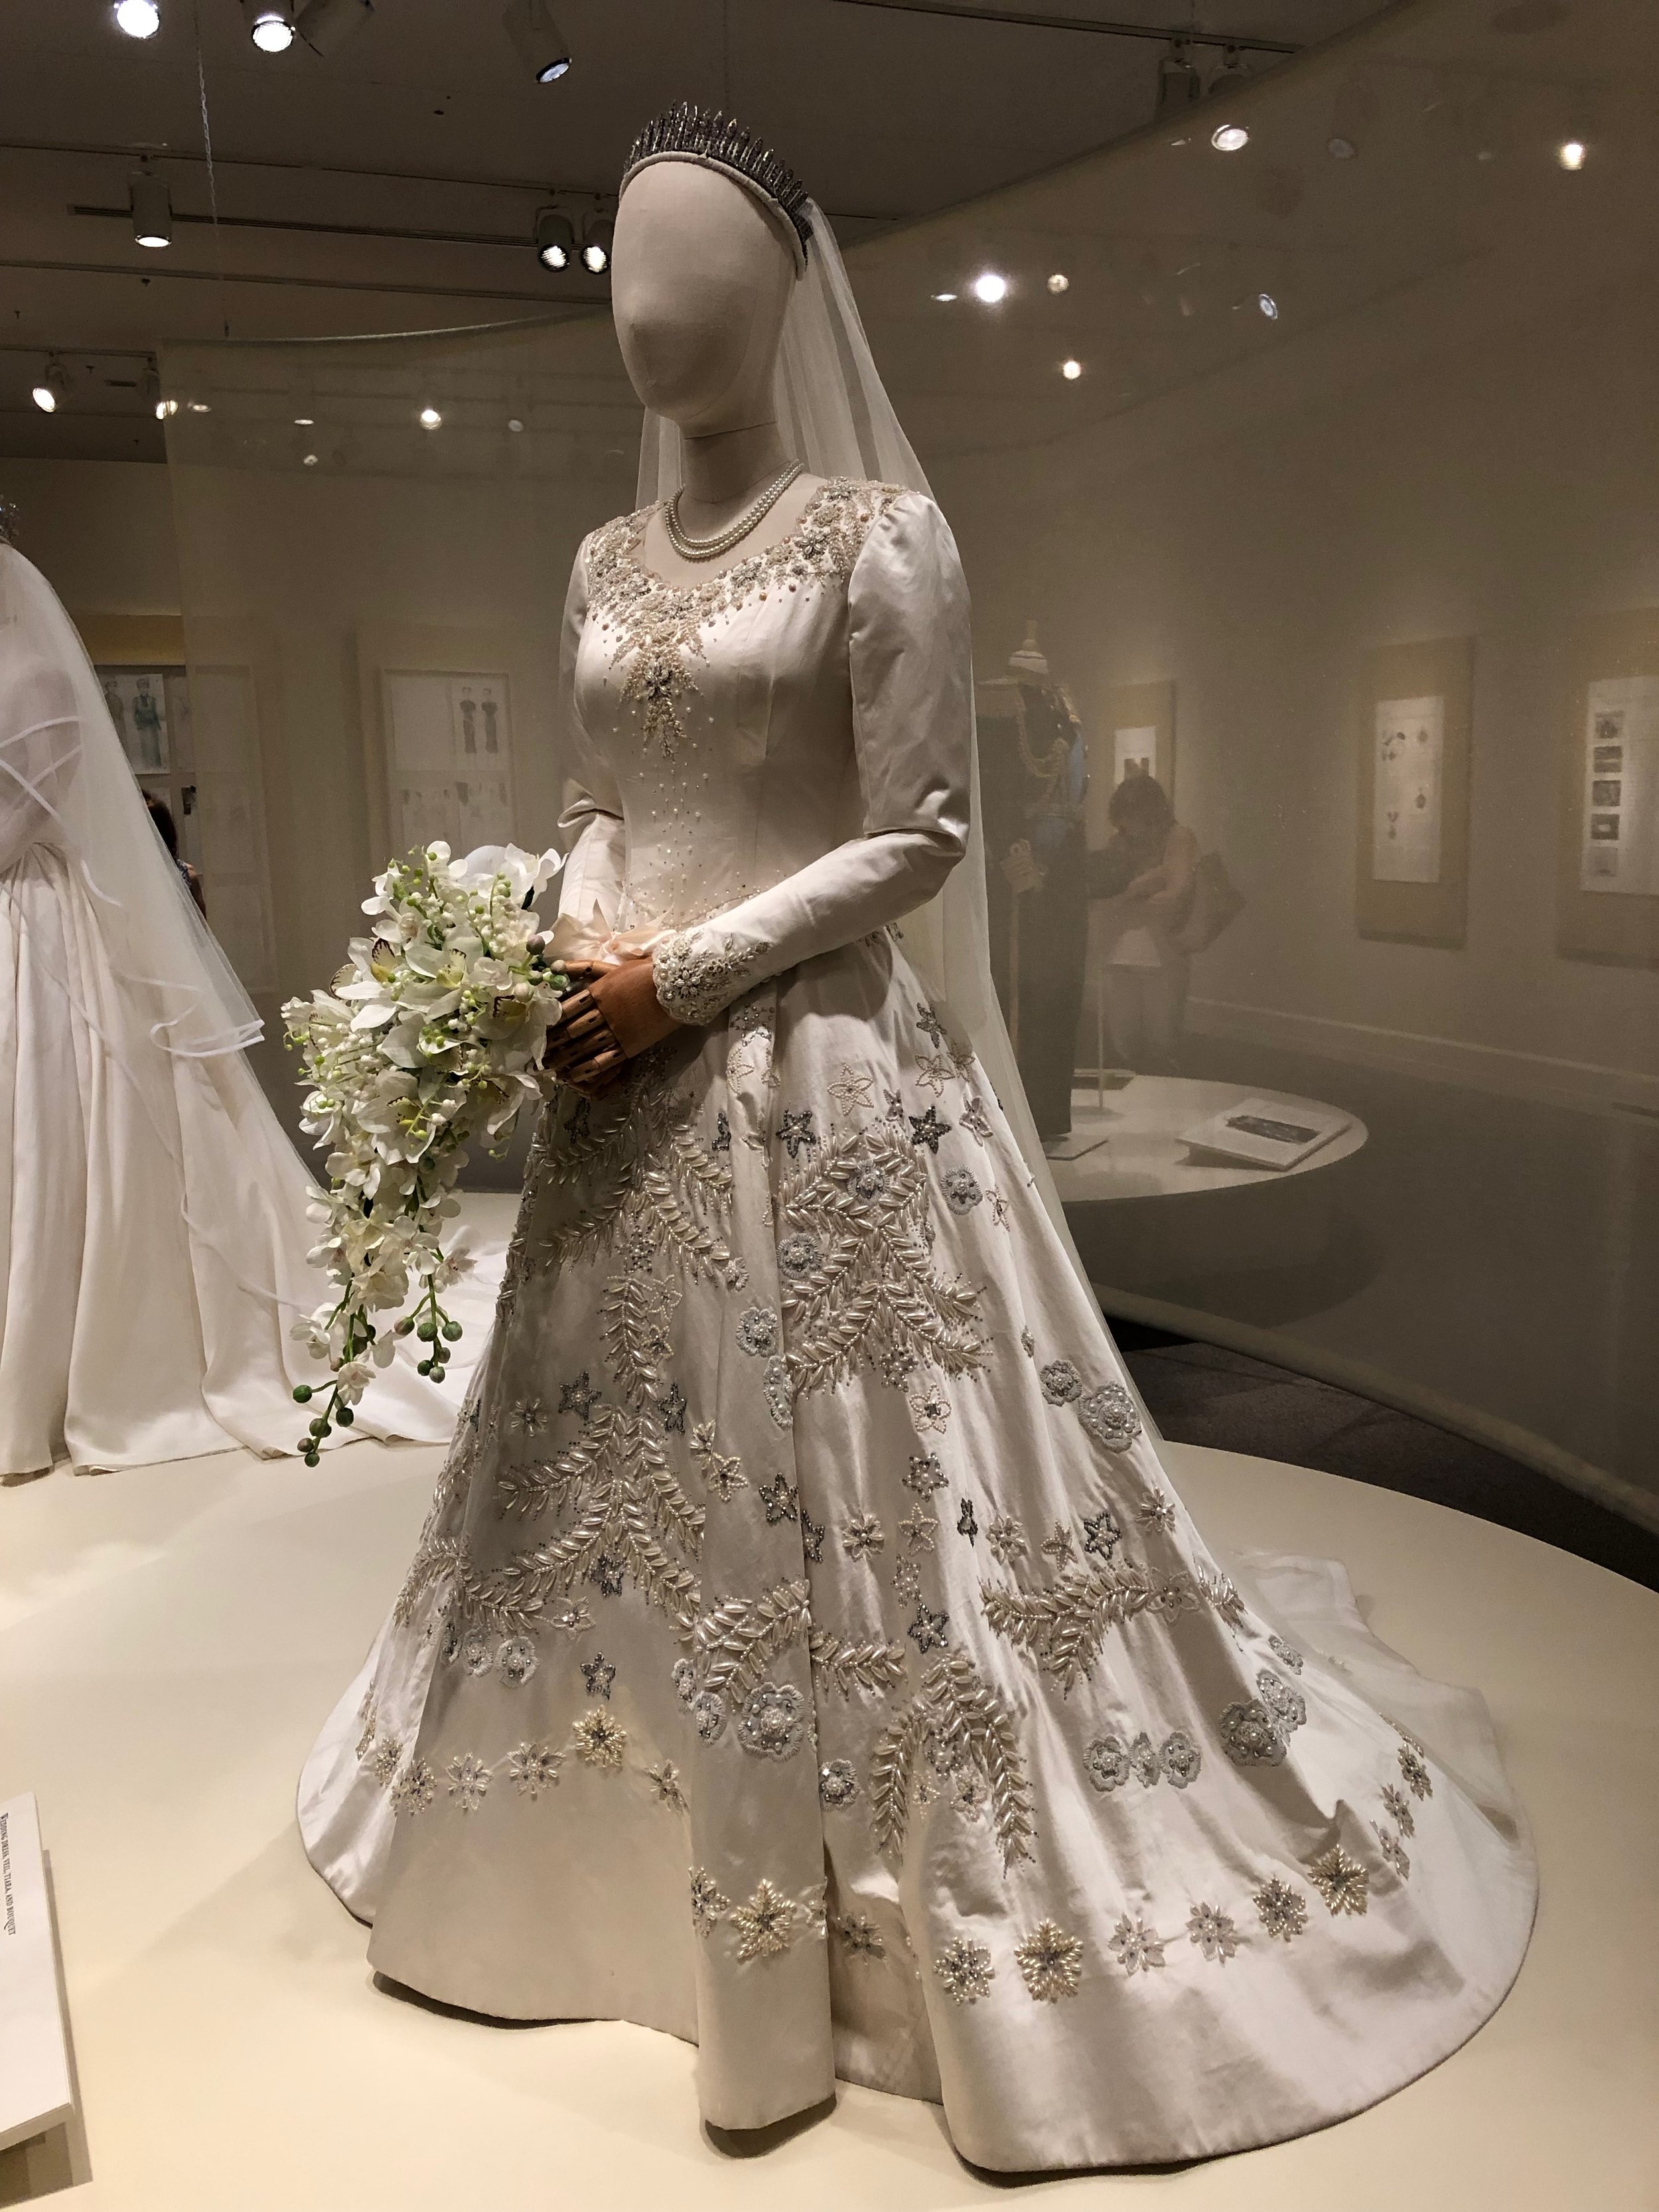 queen elizabeth wedding dress embroidery